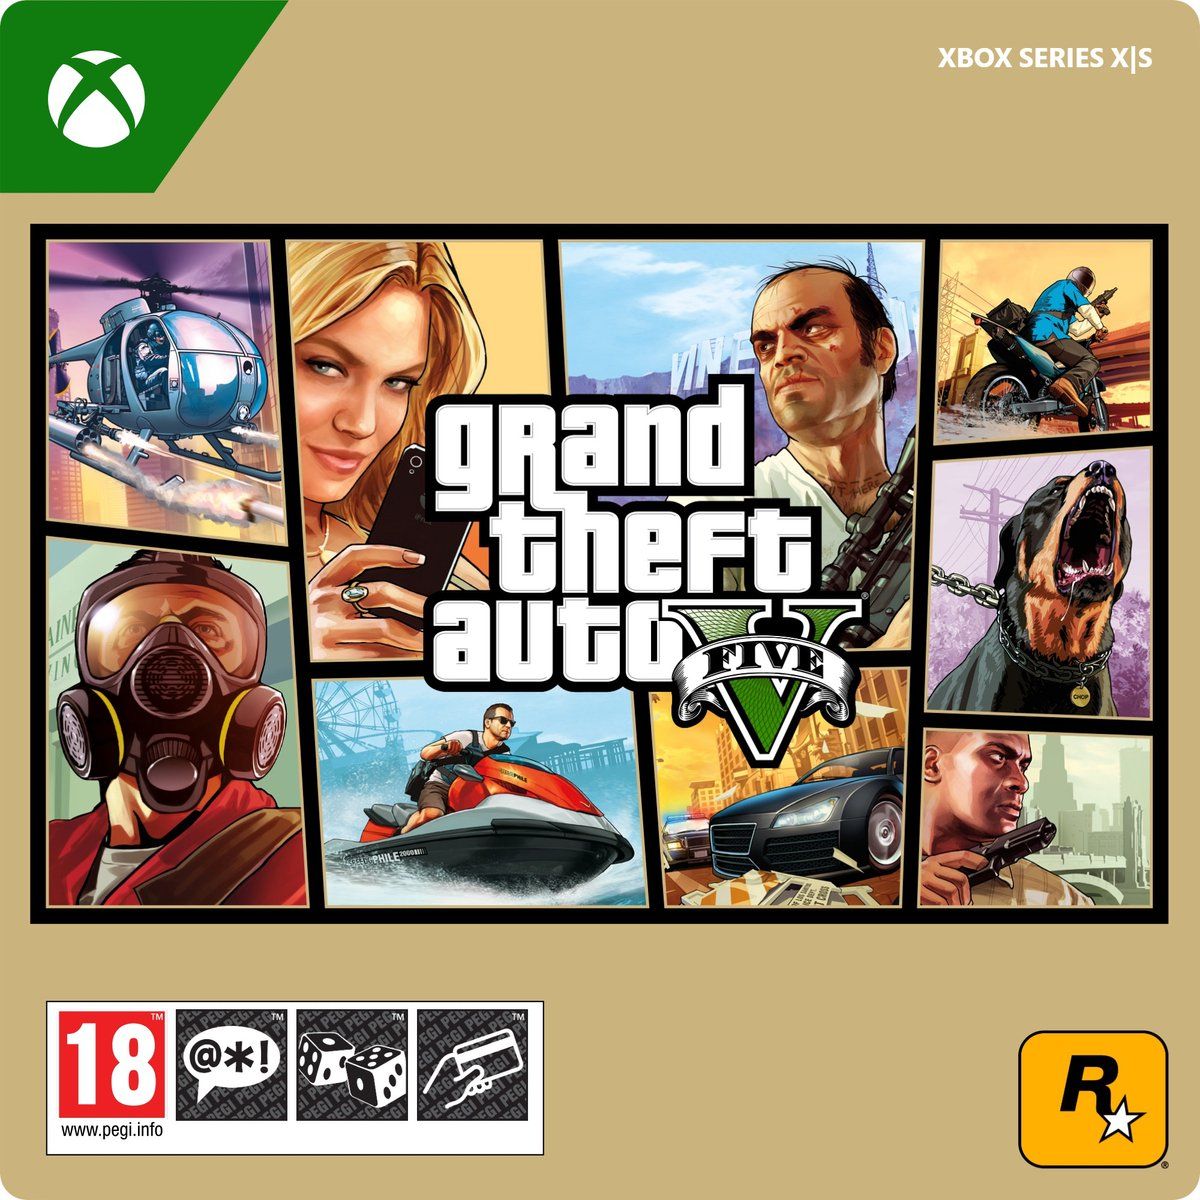 Grand Theft Auto V - Xbox Series X|S Download